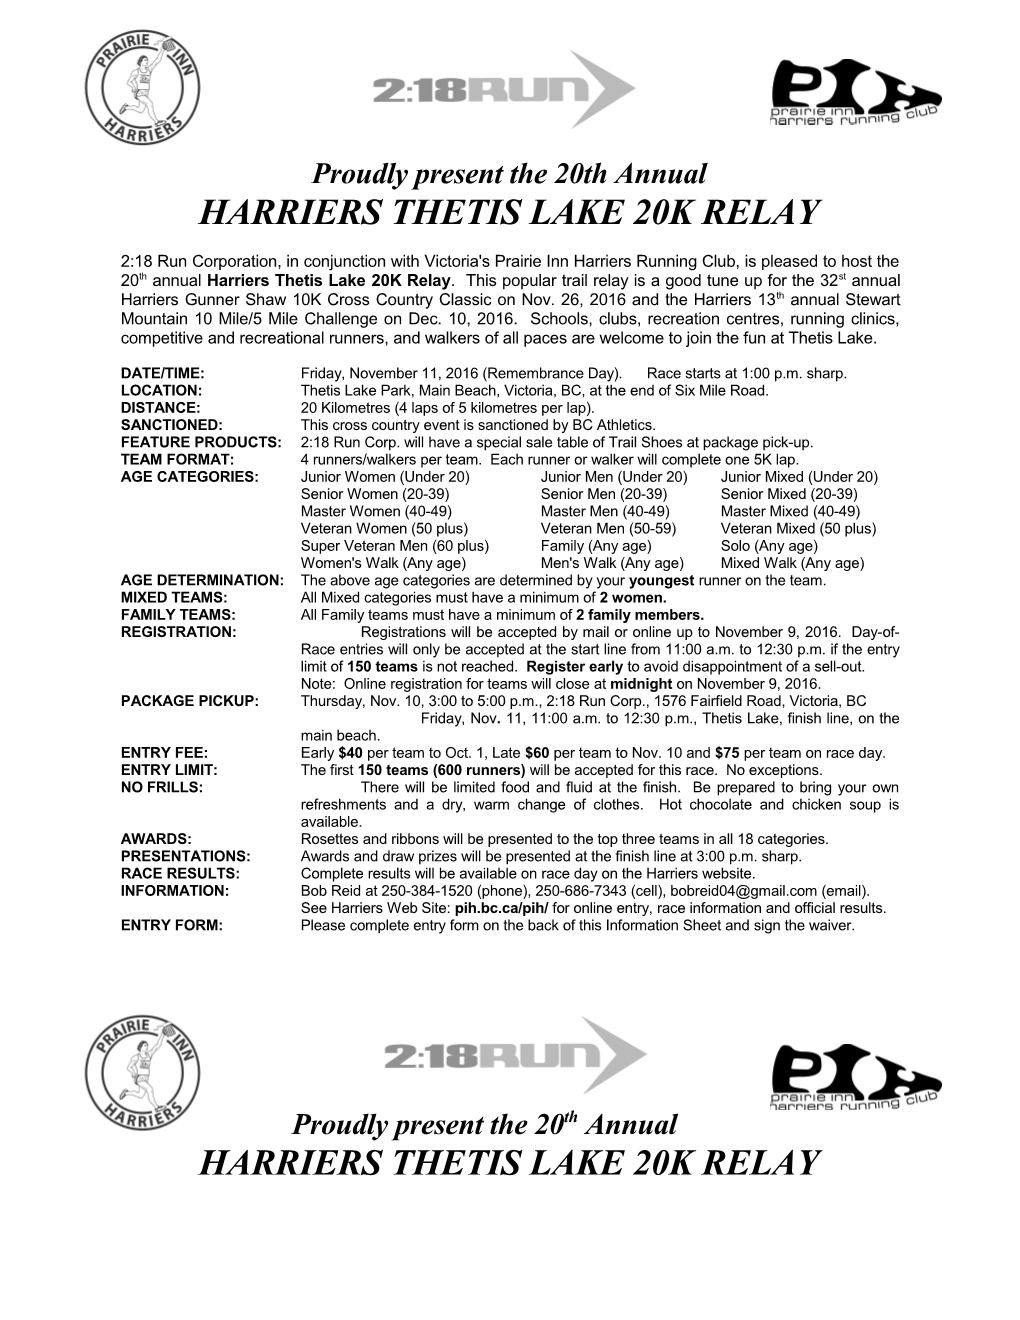 Harriers Thetis Lake 20K Relay